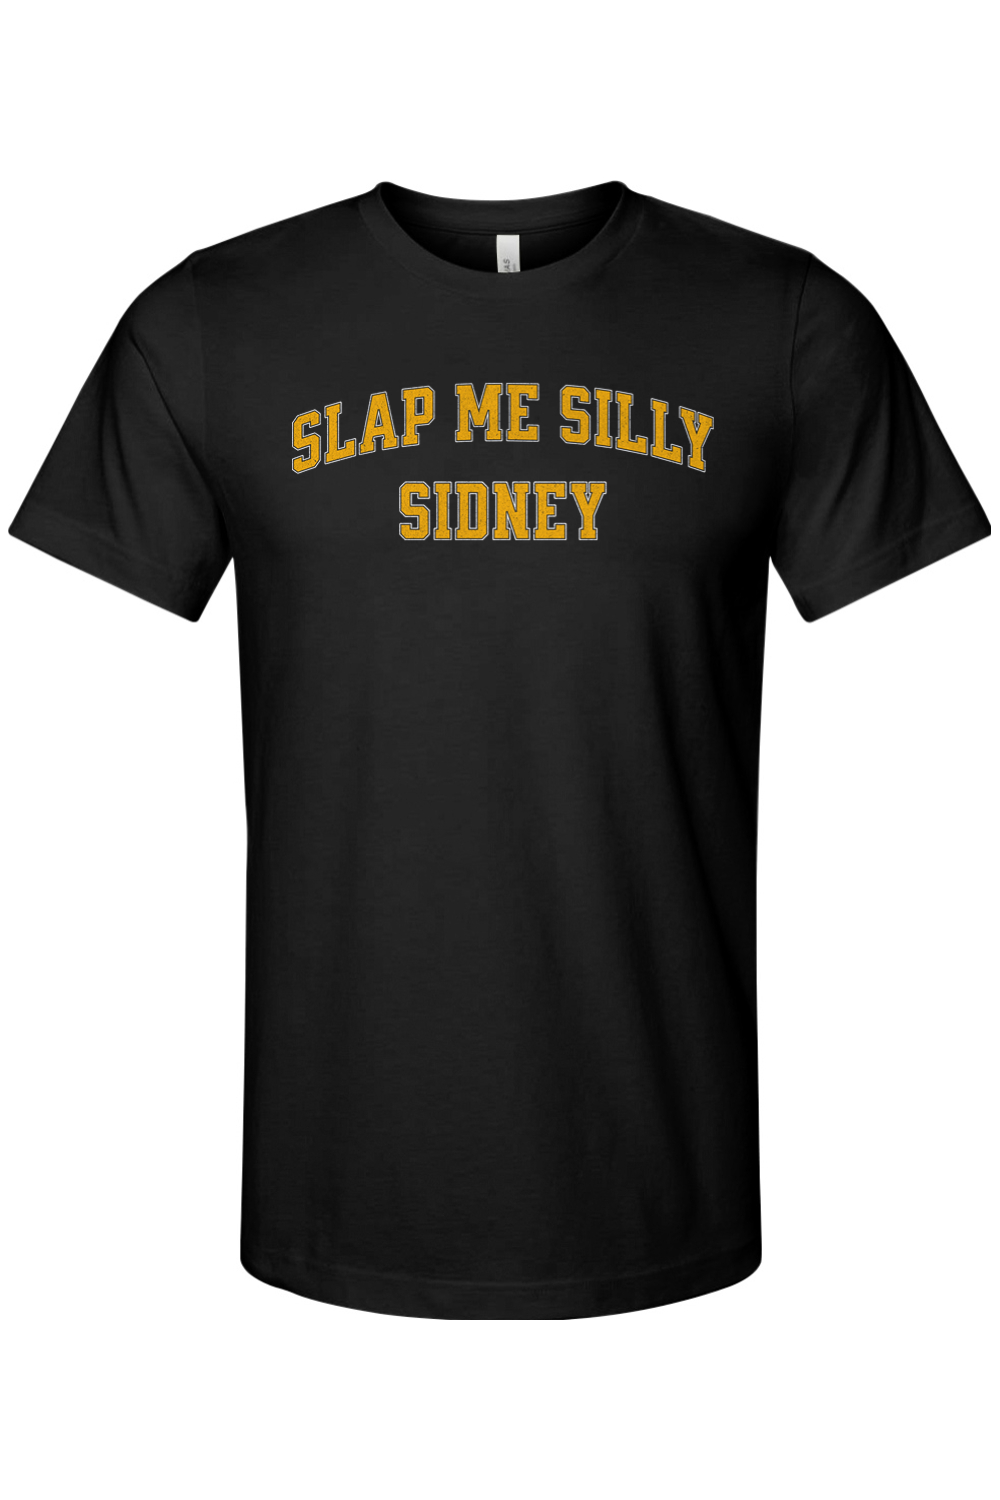 Slap Me Silly Sidney - Yinzylvania